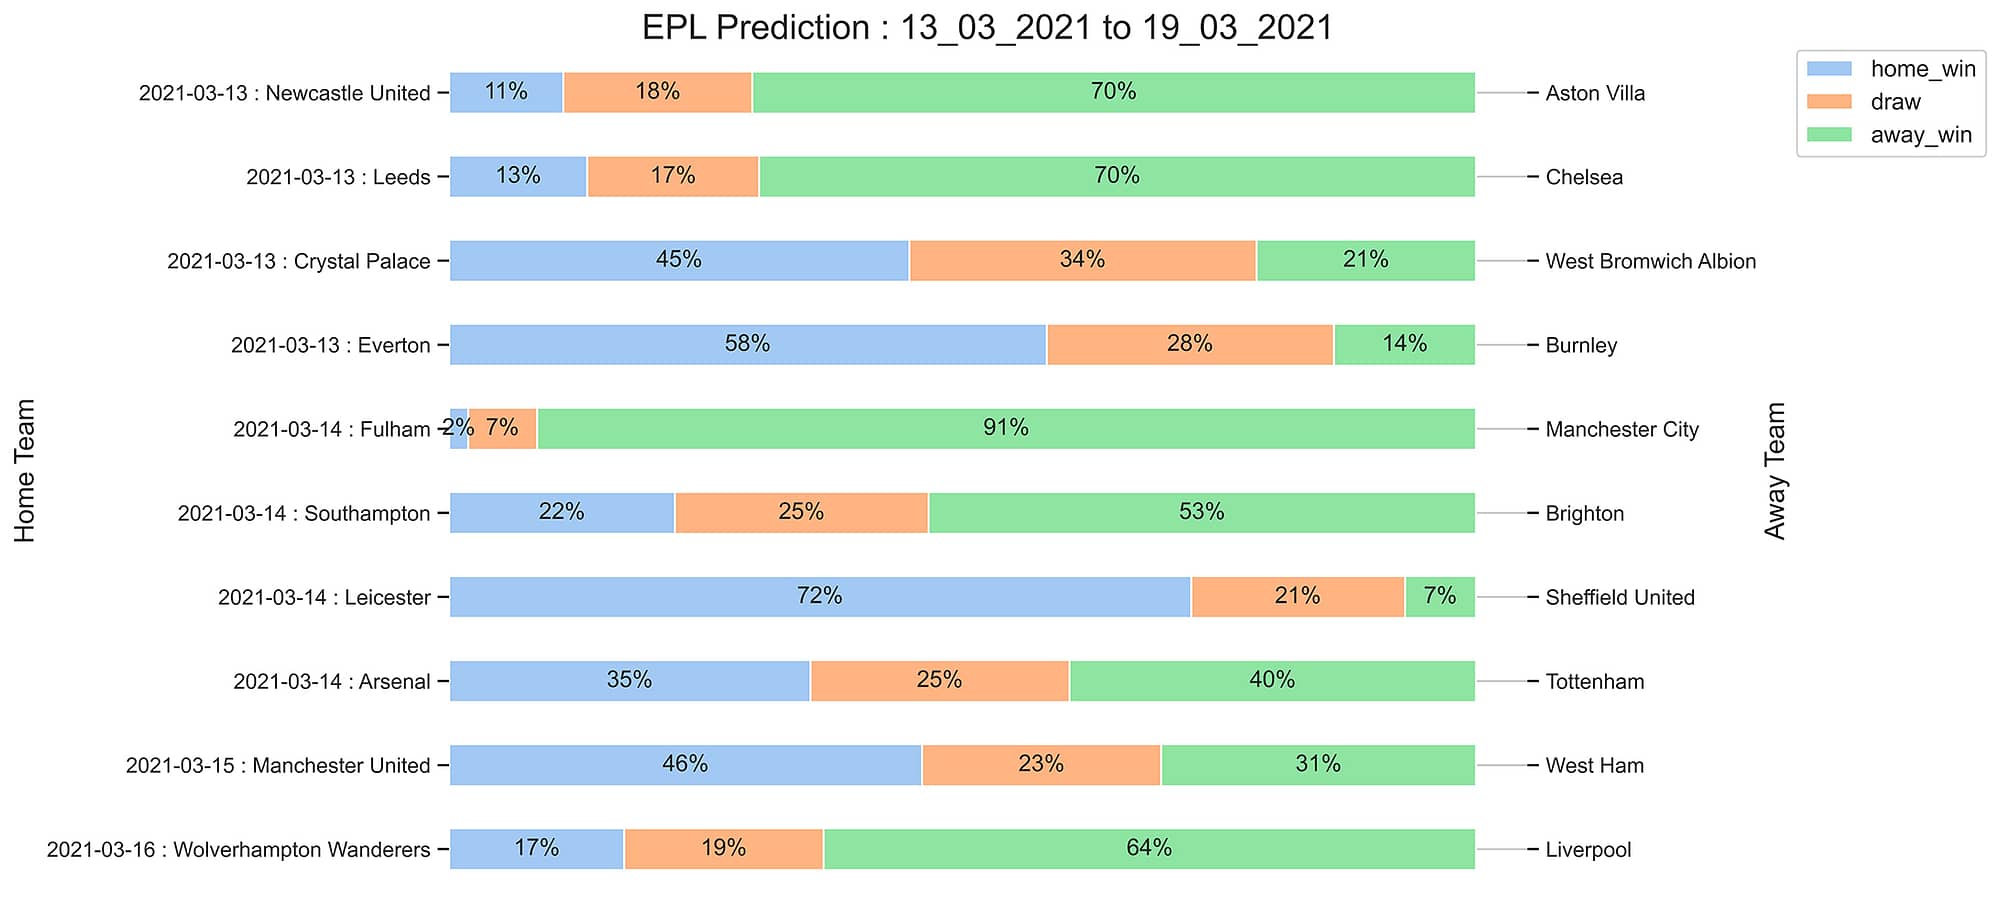 EPL_Prediction 13_03_2021